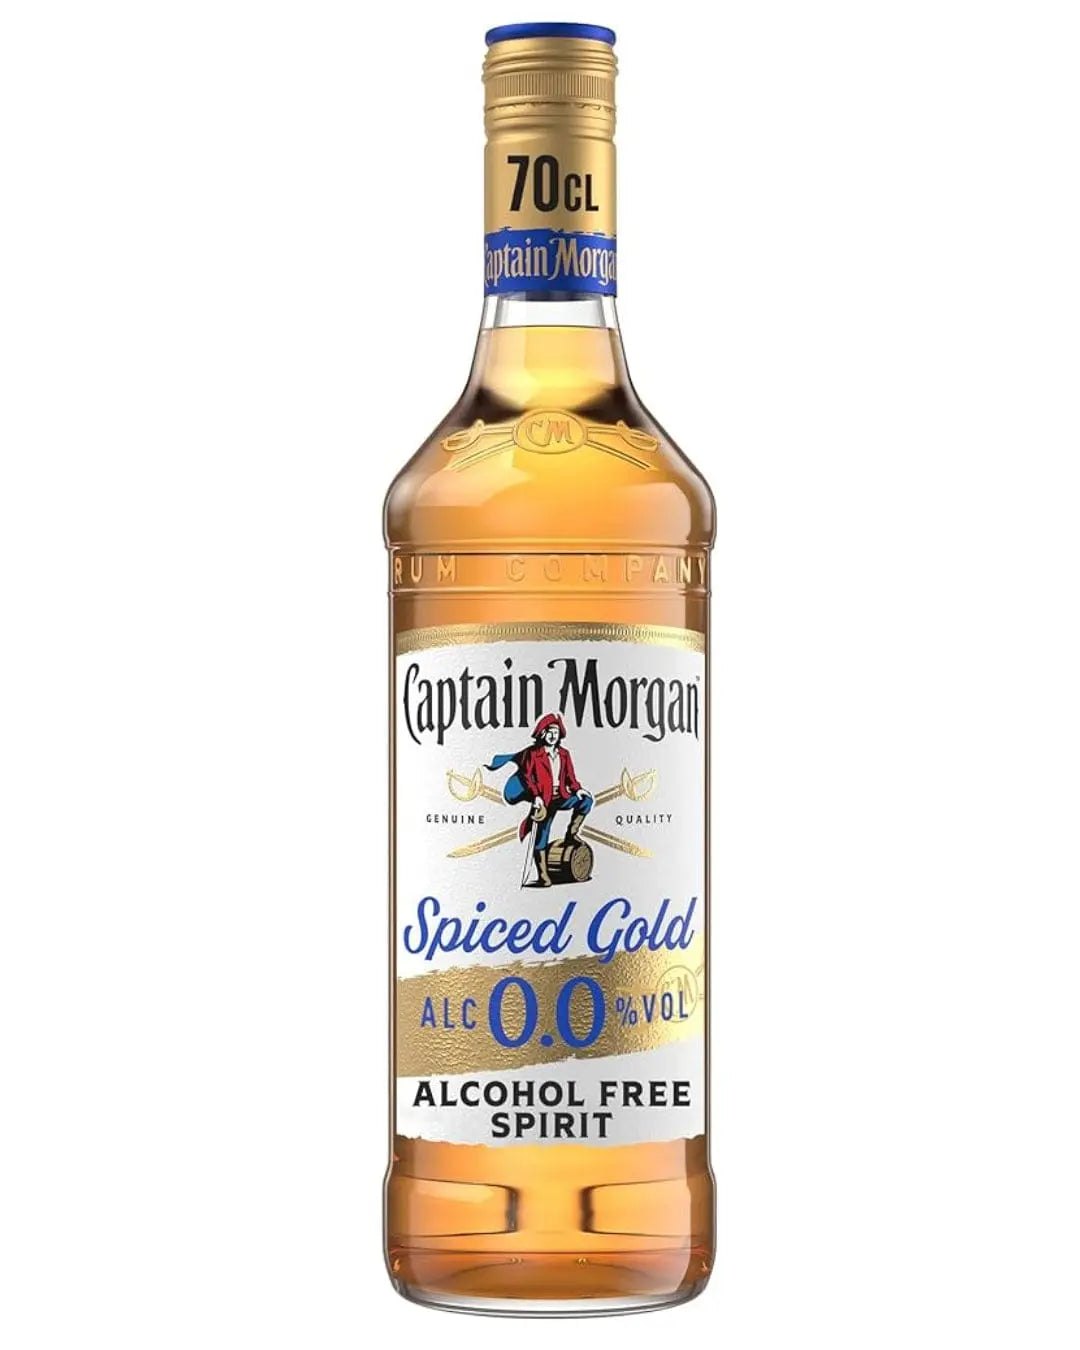 Captain Morgan Spiced Gold Alcohol Free Rum, 70 cl Spirits